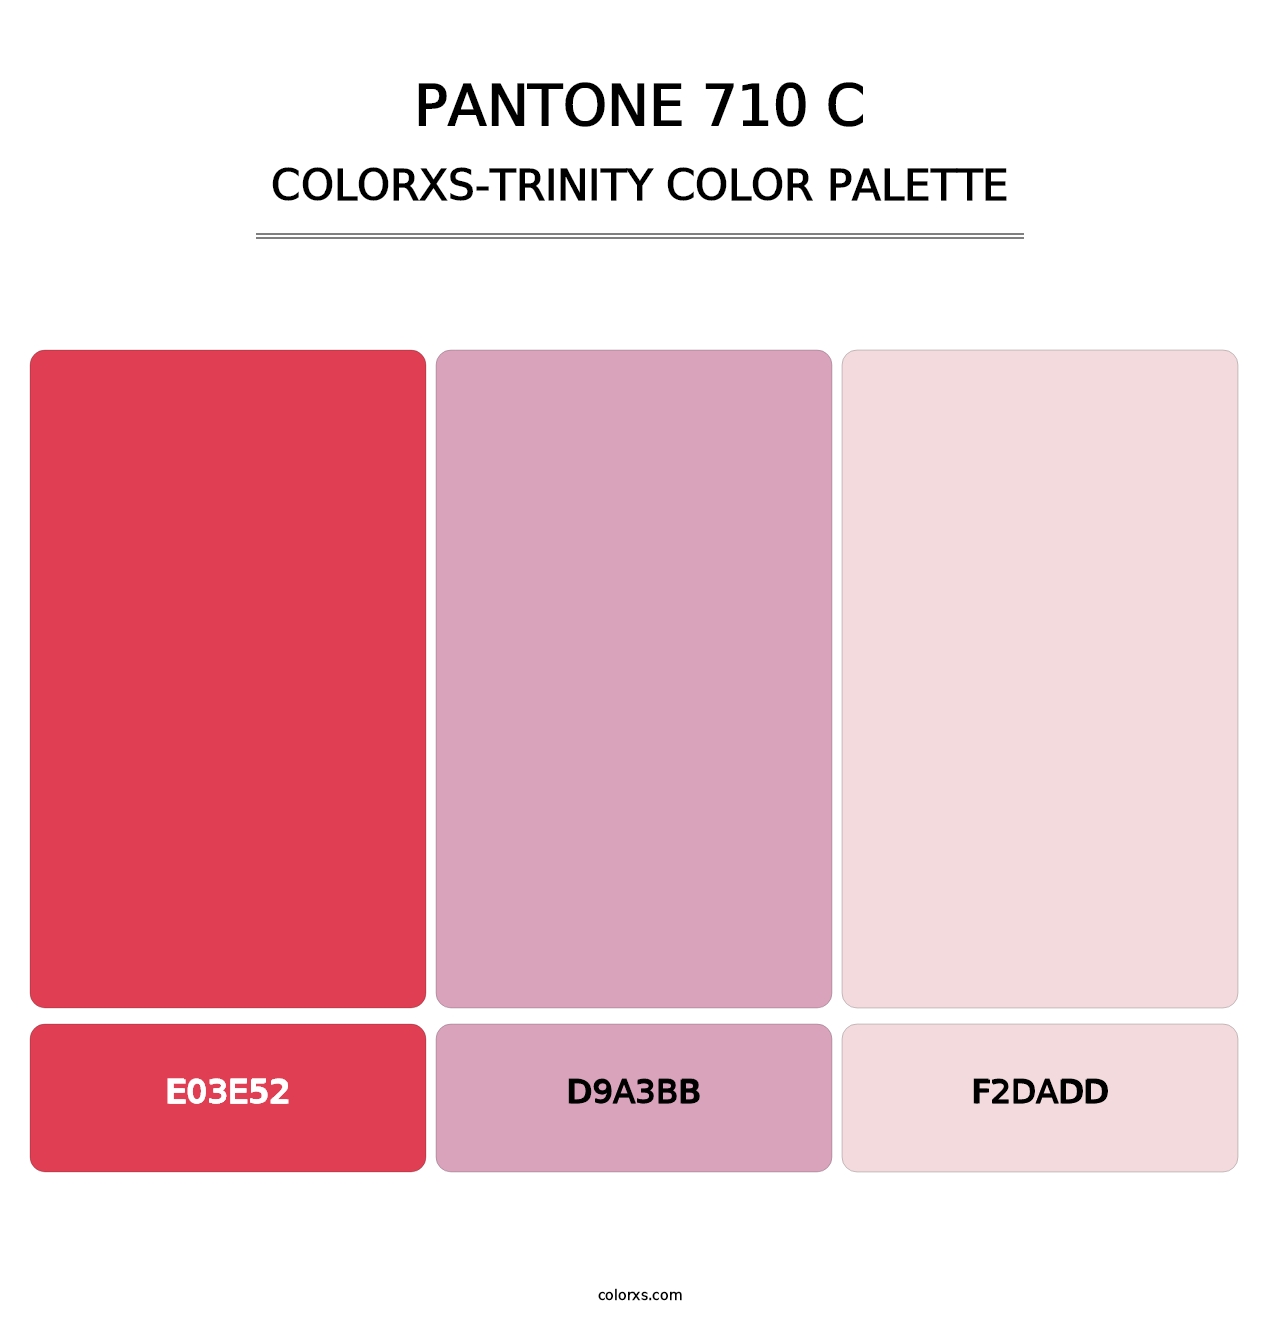 PANTONE 710 C - Colorxs Trinity Palette